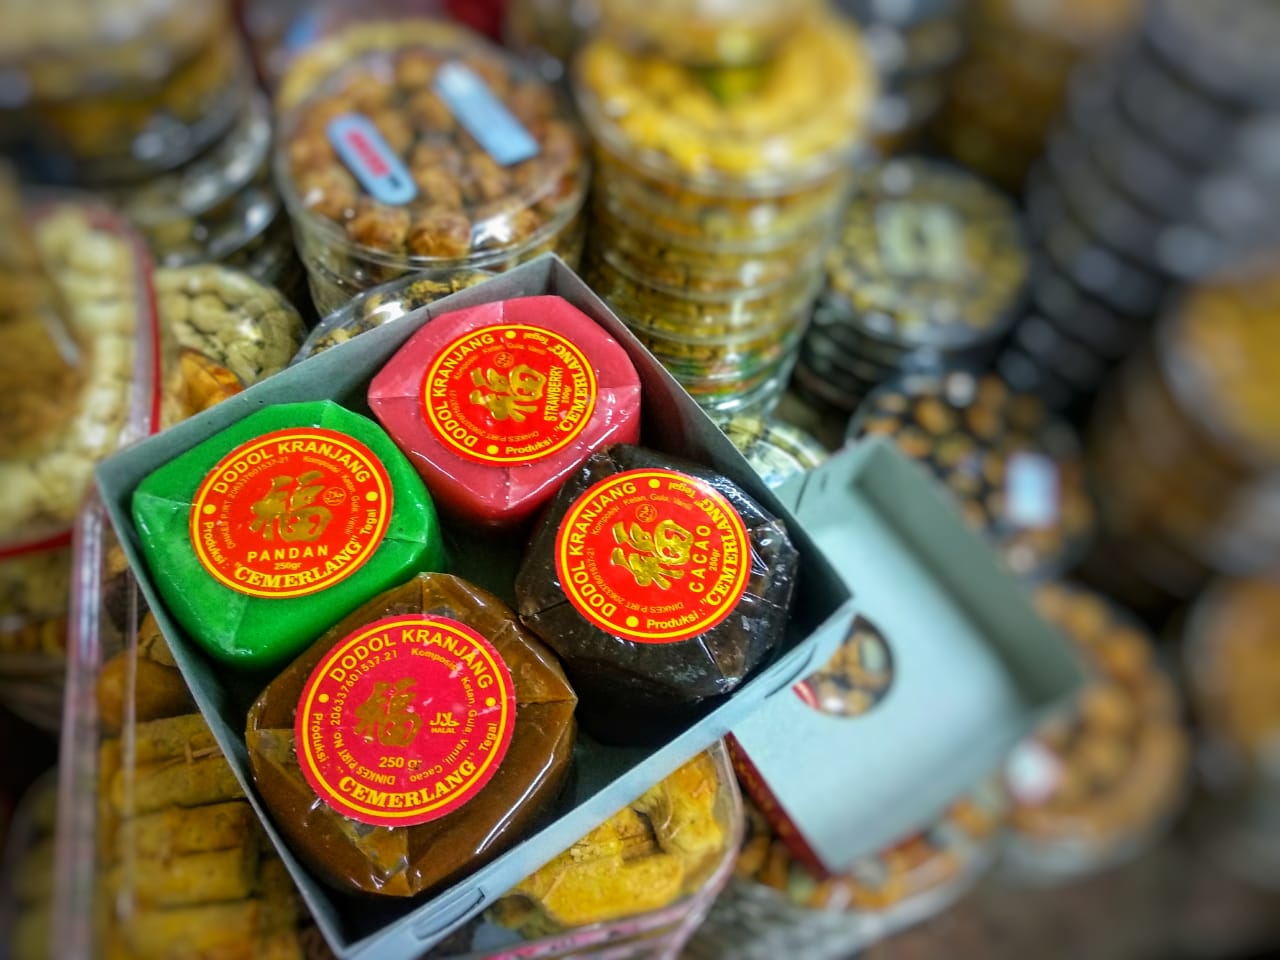 Kue keranjang dengan empat varian rasa (stroberi, pandan, coklat dan original) di salah satu toko kue di Pasar Atom, Jl. Bunguran 45 Surabaya. (Foto: Rizki/ngopibareng.id)